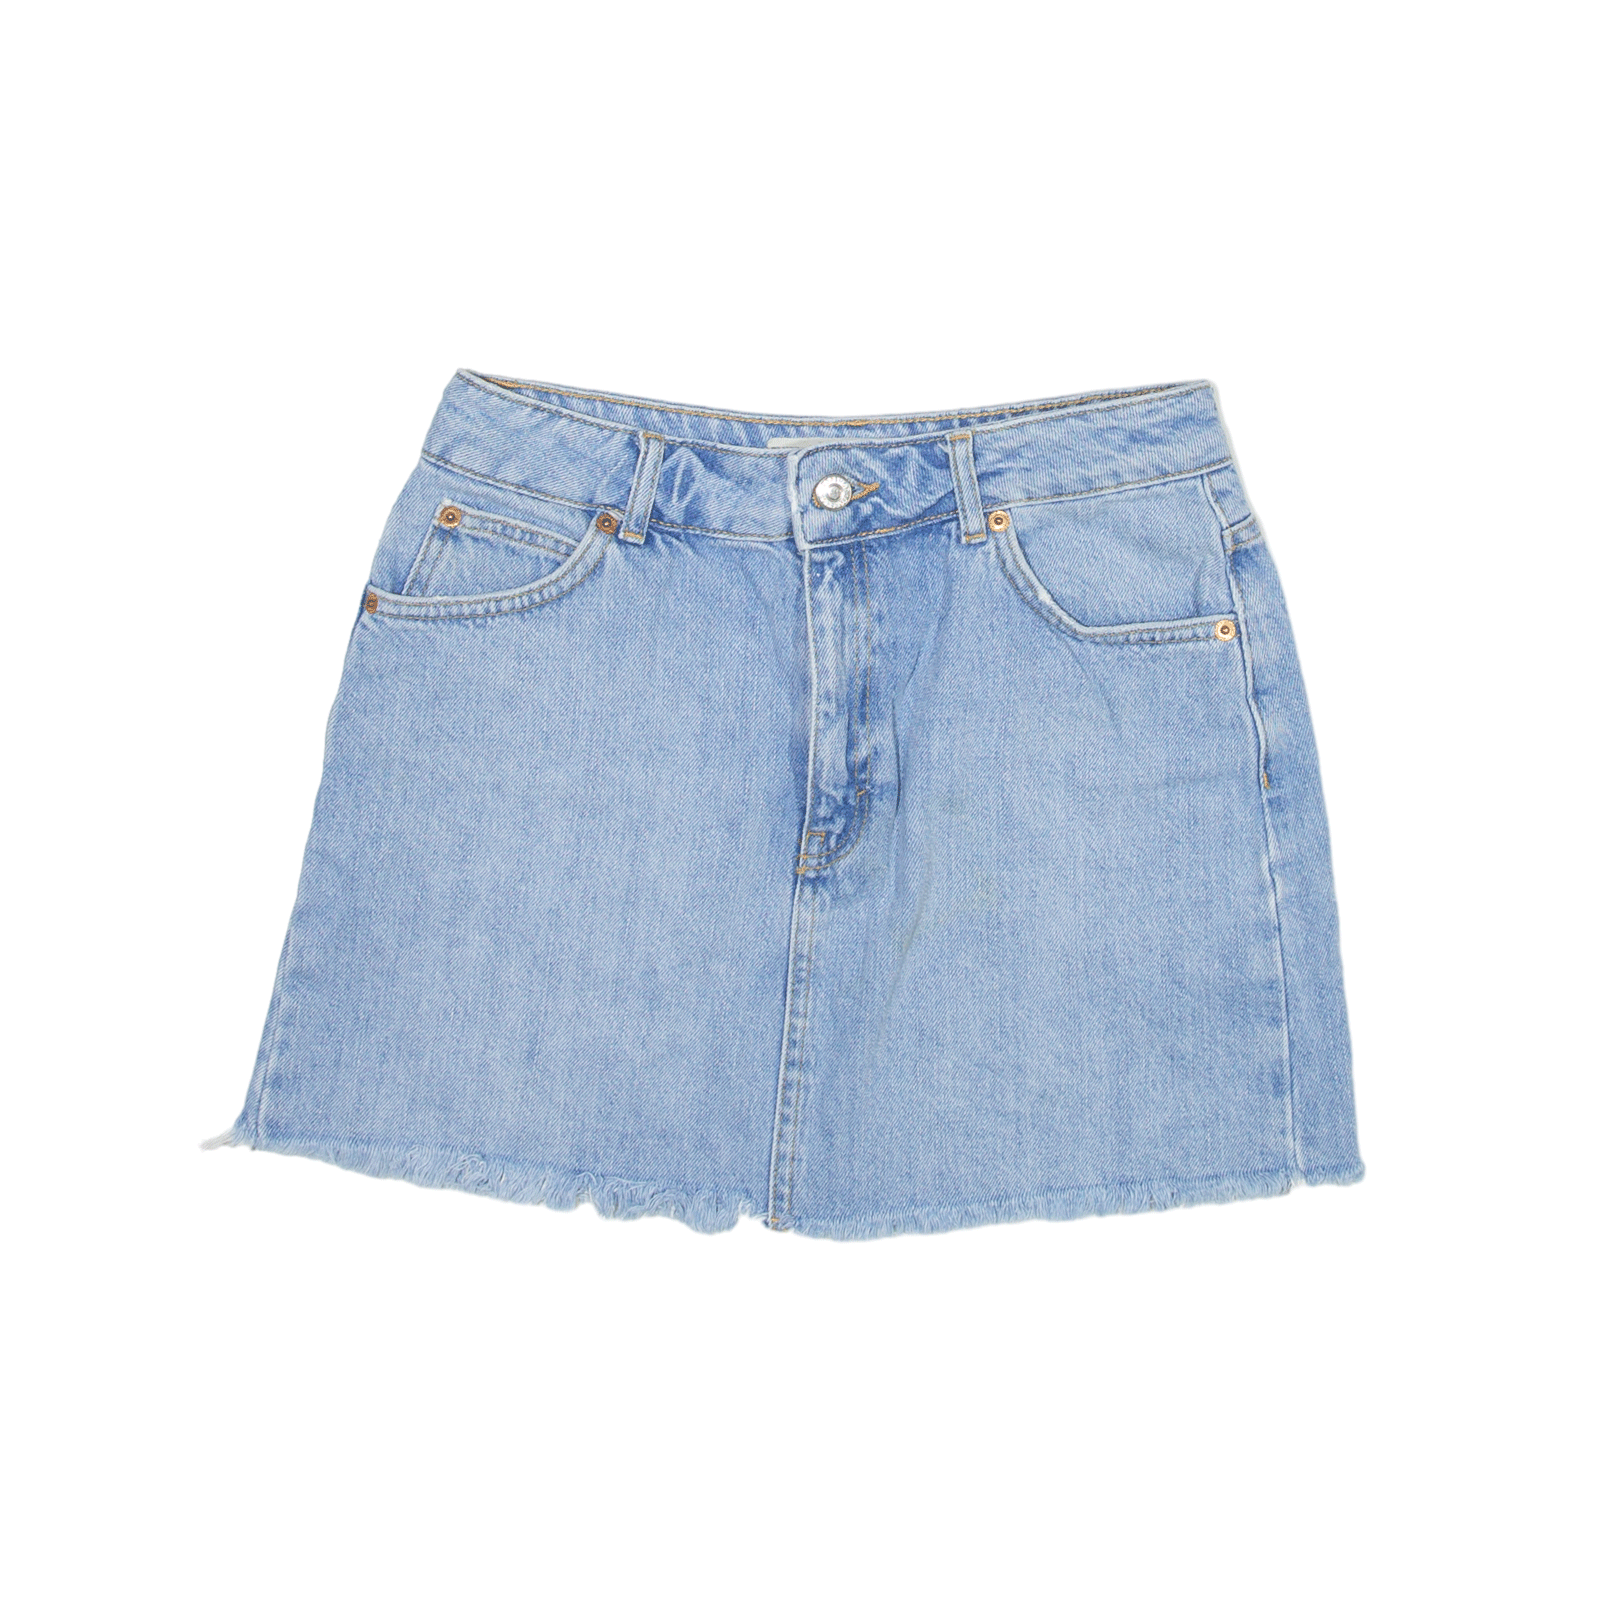 Basic Denim Skirt Women Washed High Waist Mini Skirts Jeans Summer - Skirts  - AliExpress